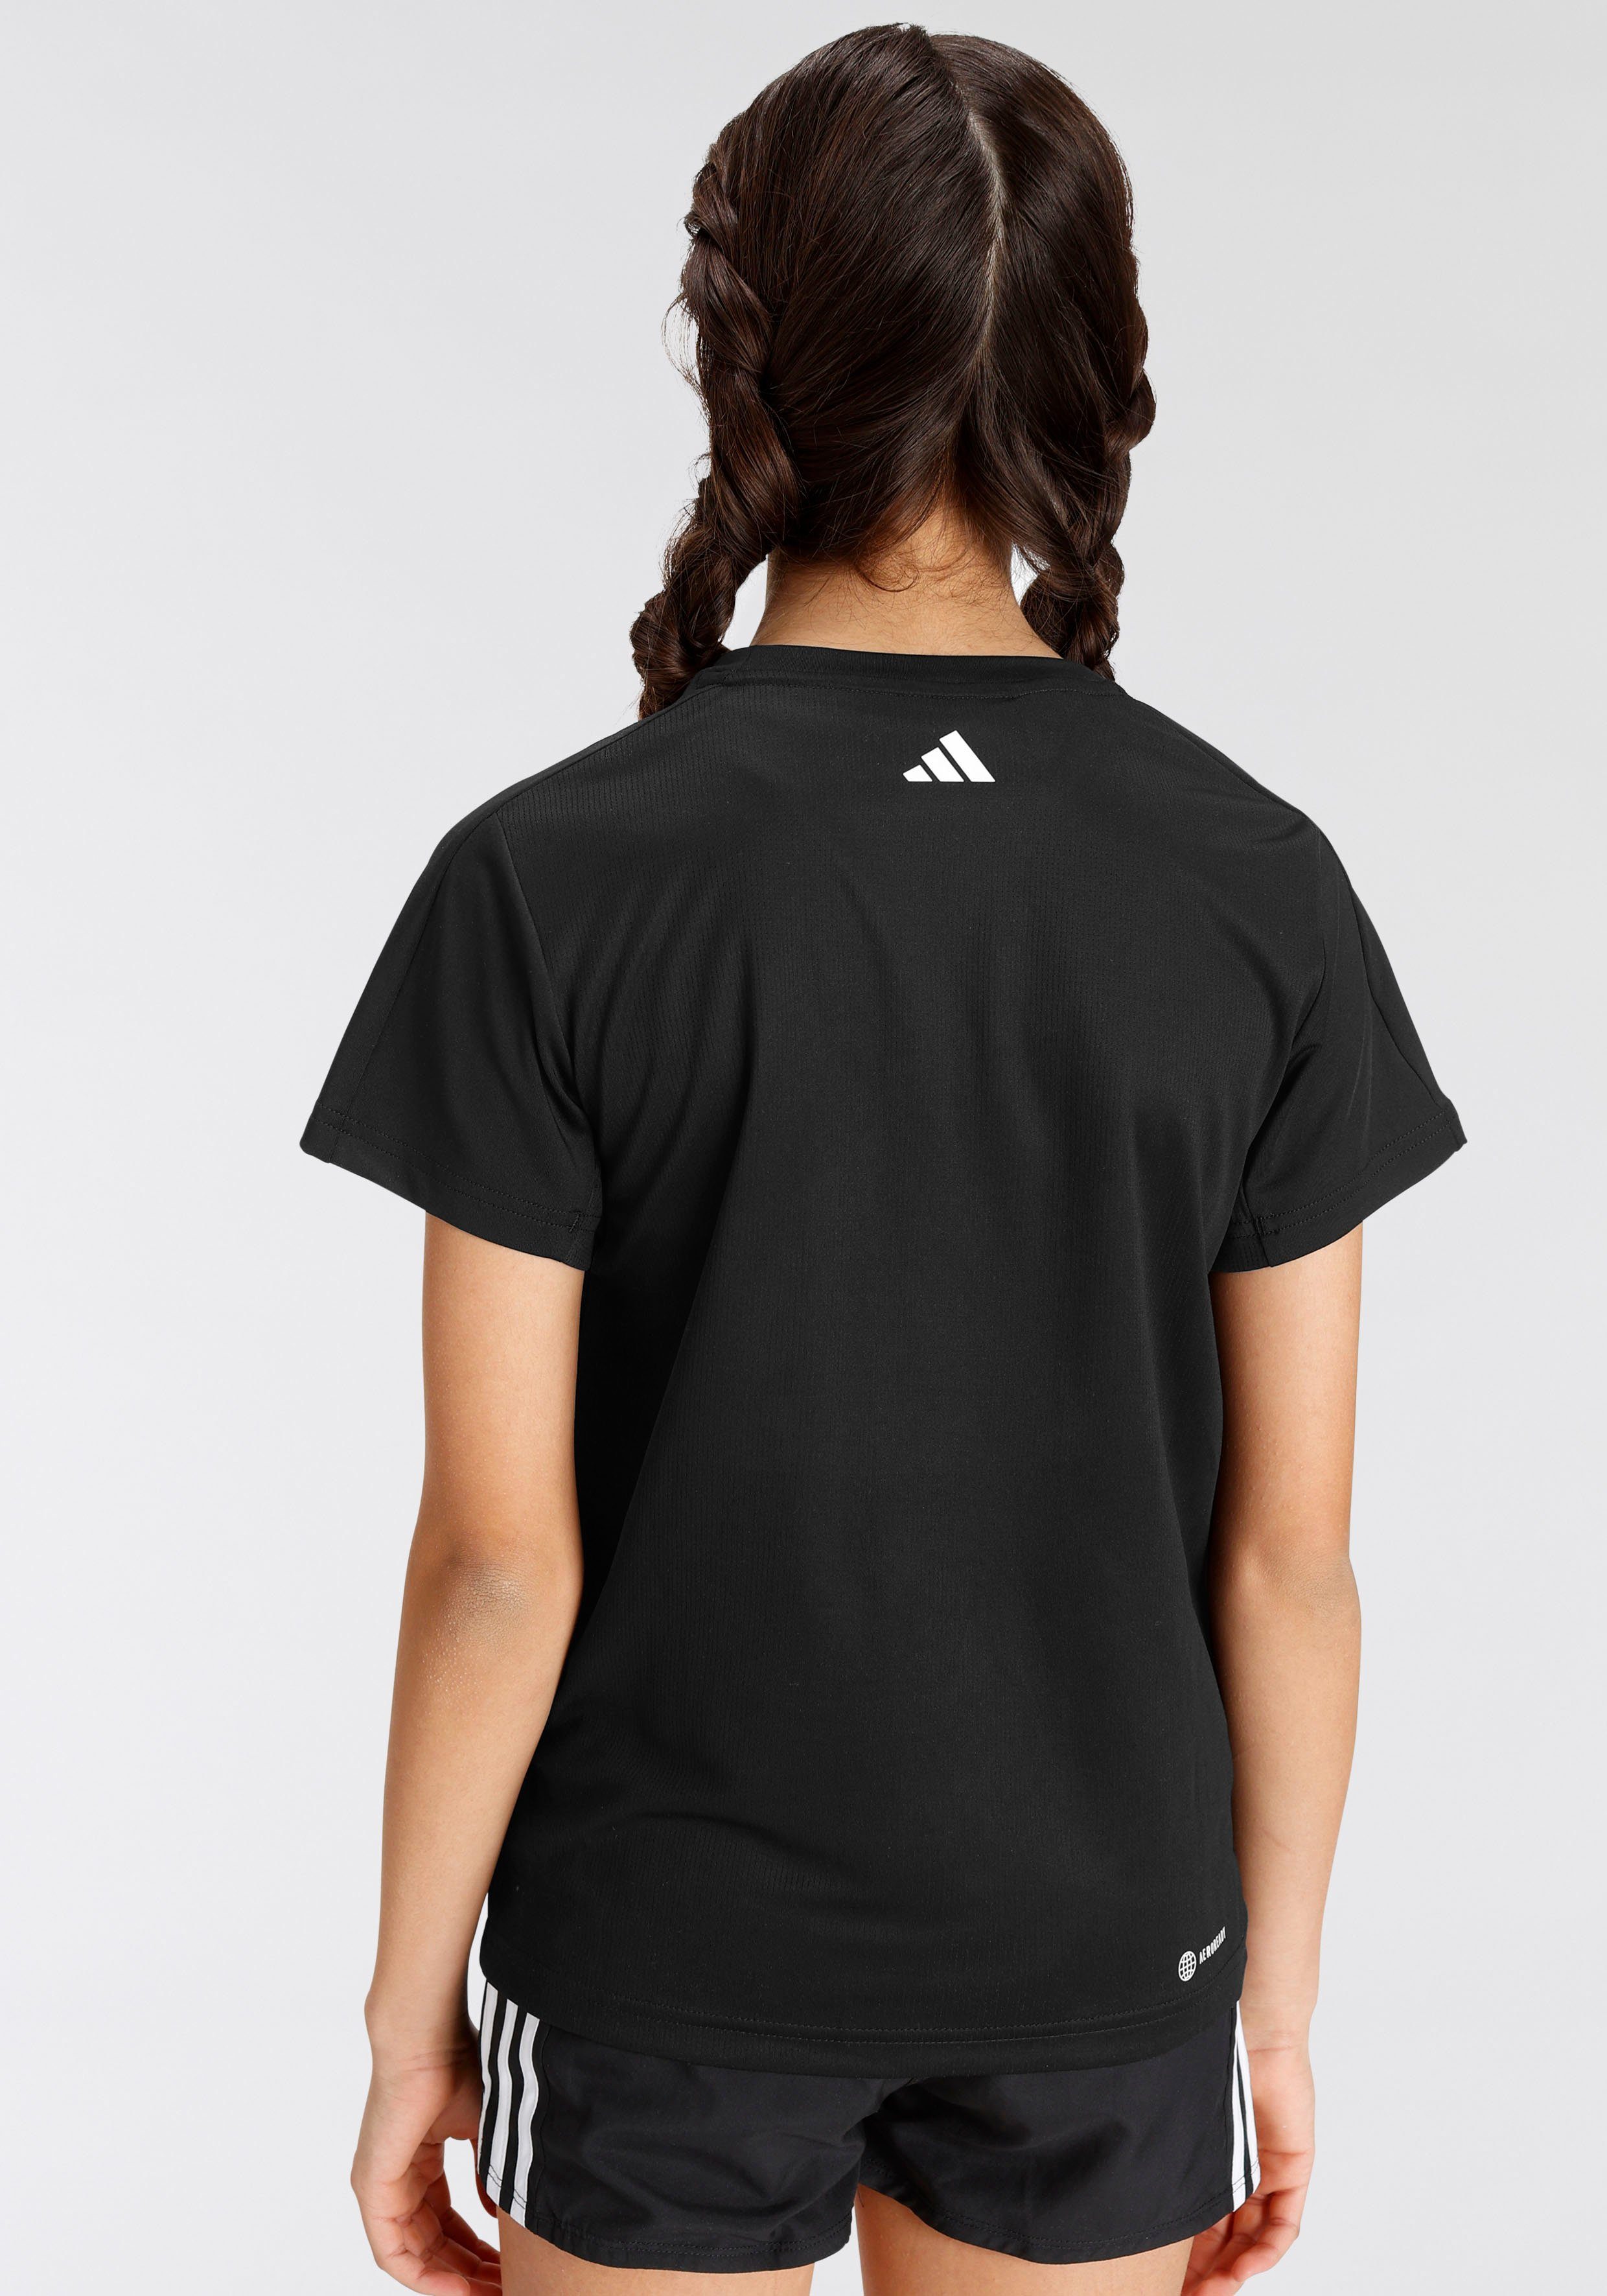 adidas LOGO AEROREADY T-Shirt adidas / ESSENTIALS White Sportswear Performance REGULAR-FIT Black